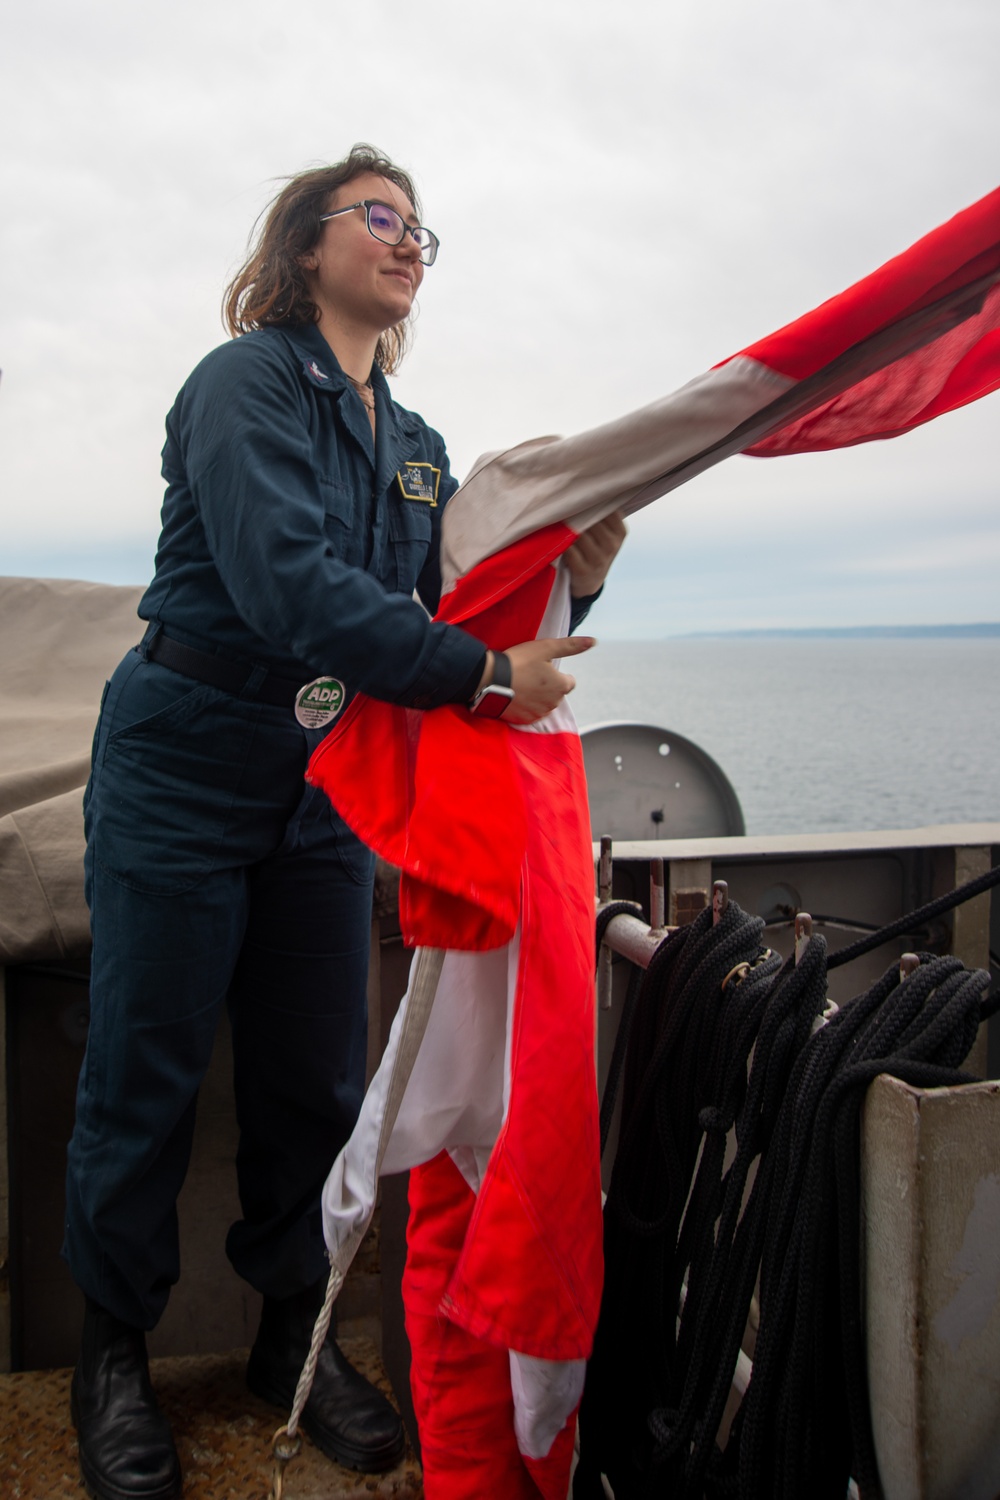 Sailor Raises Signal Flag